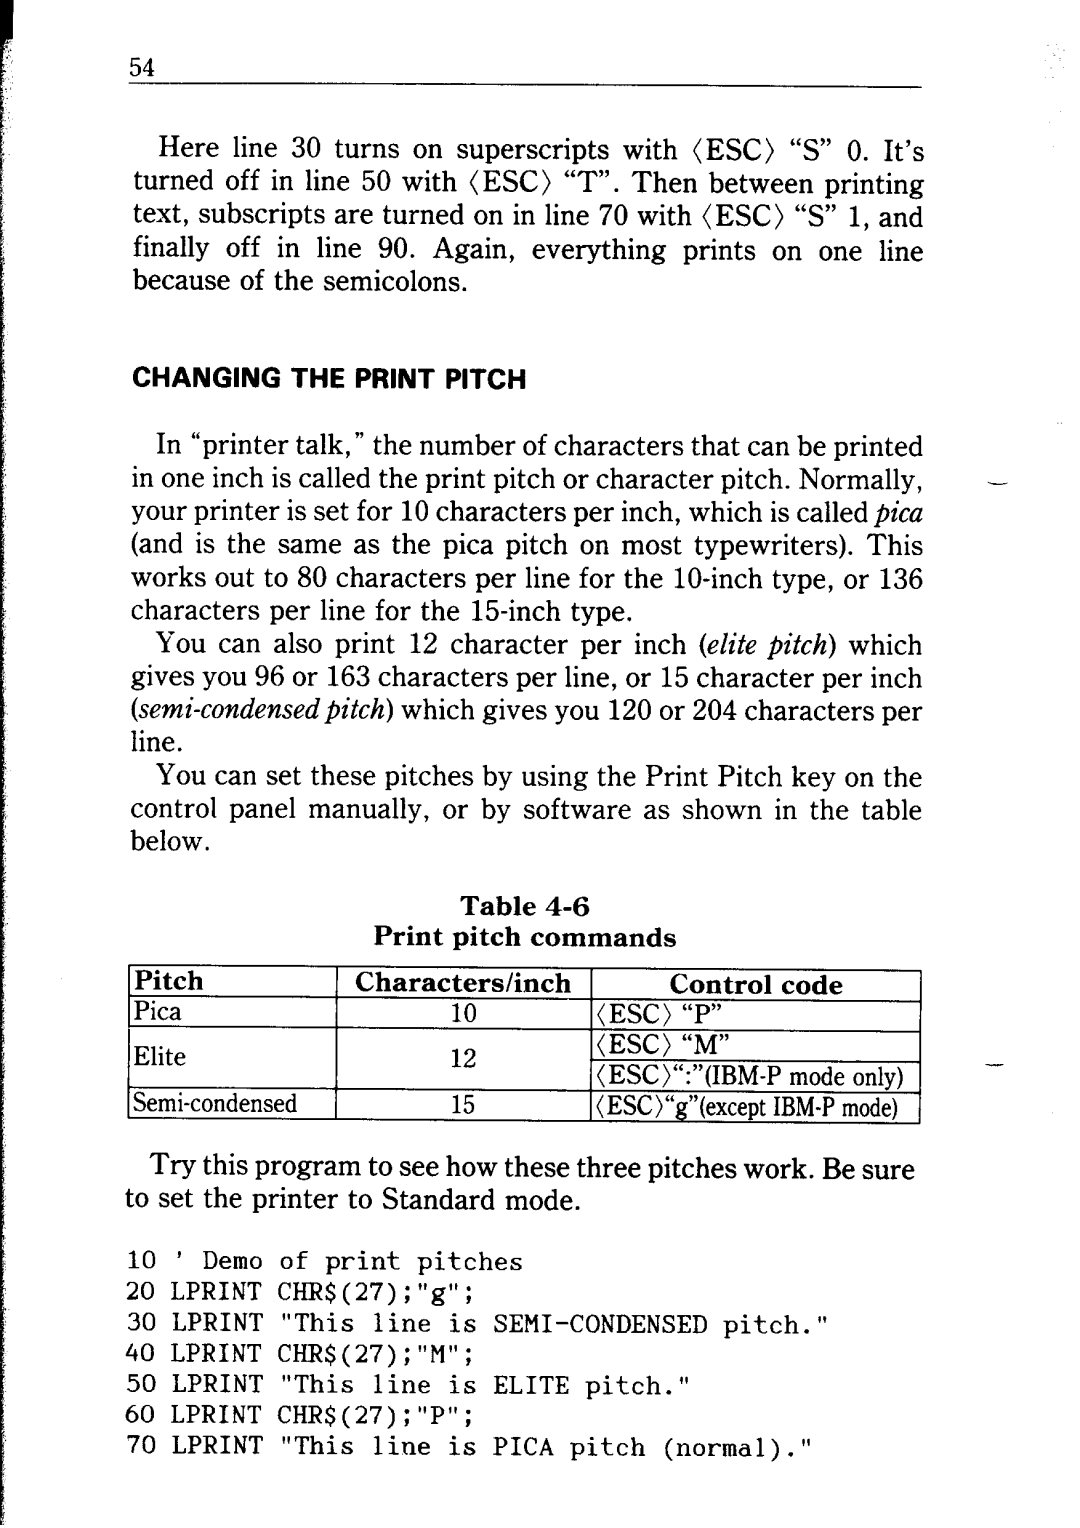 Star Micronics NB24-10/15 user manual Changing The Print Pitch, Demo of print pitches 20 LPRINT CHR$27g 